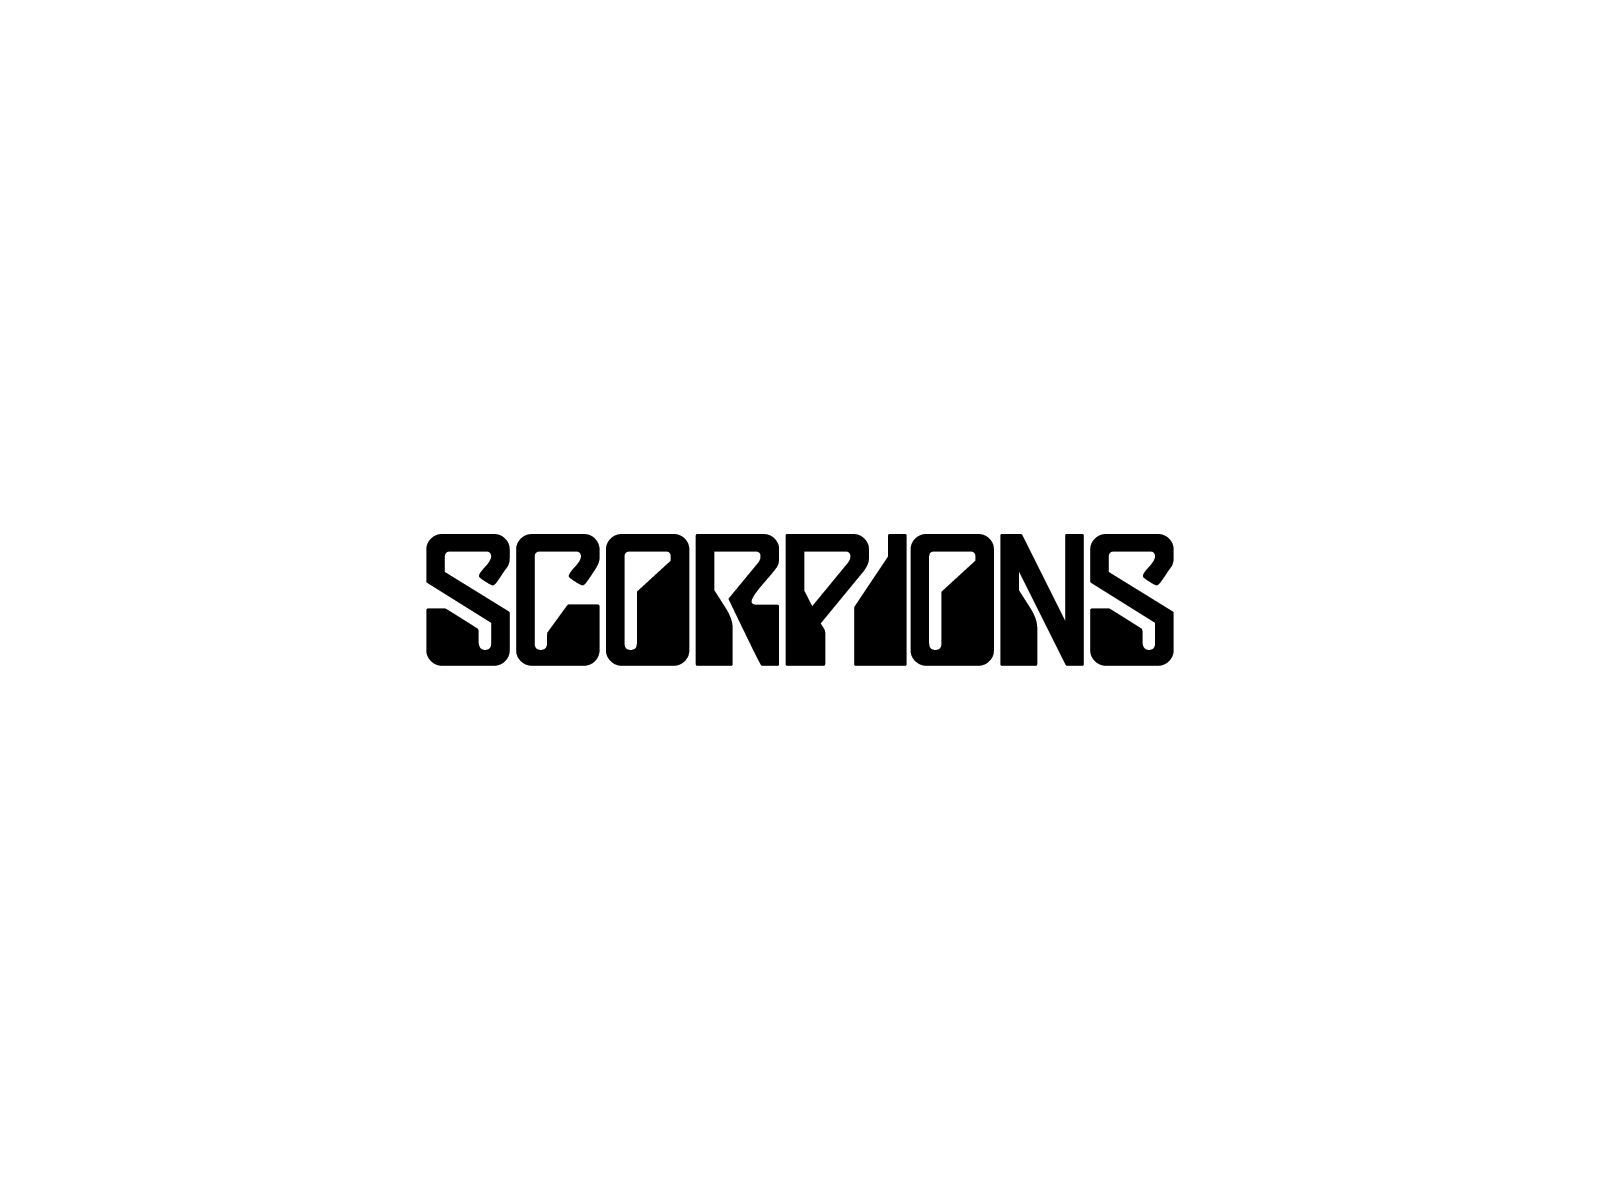 Scorpions logo and wallpaper Band logos - Rock band logos, metal